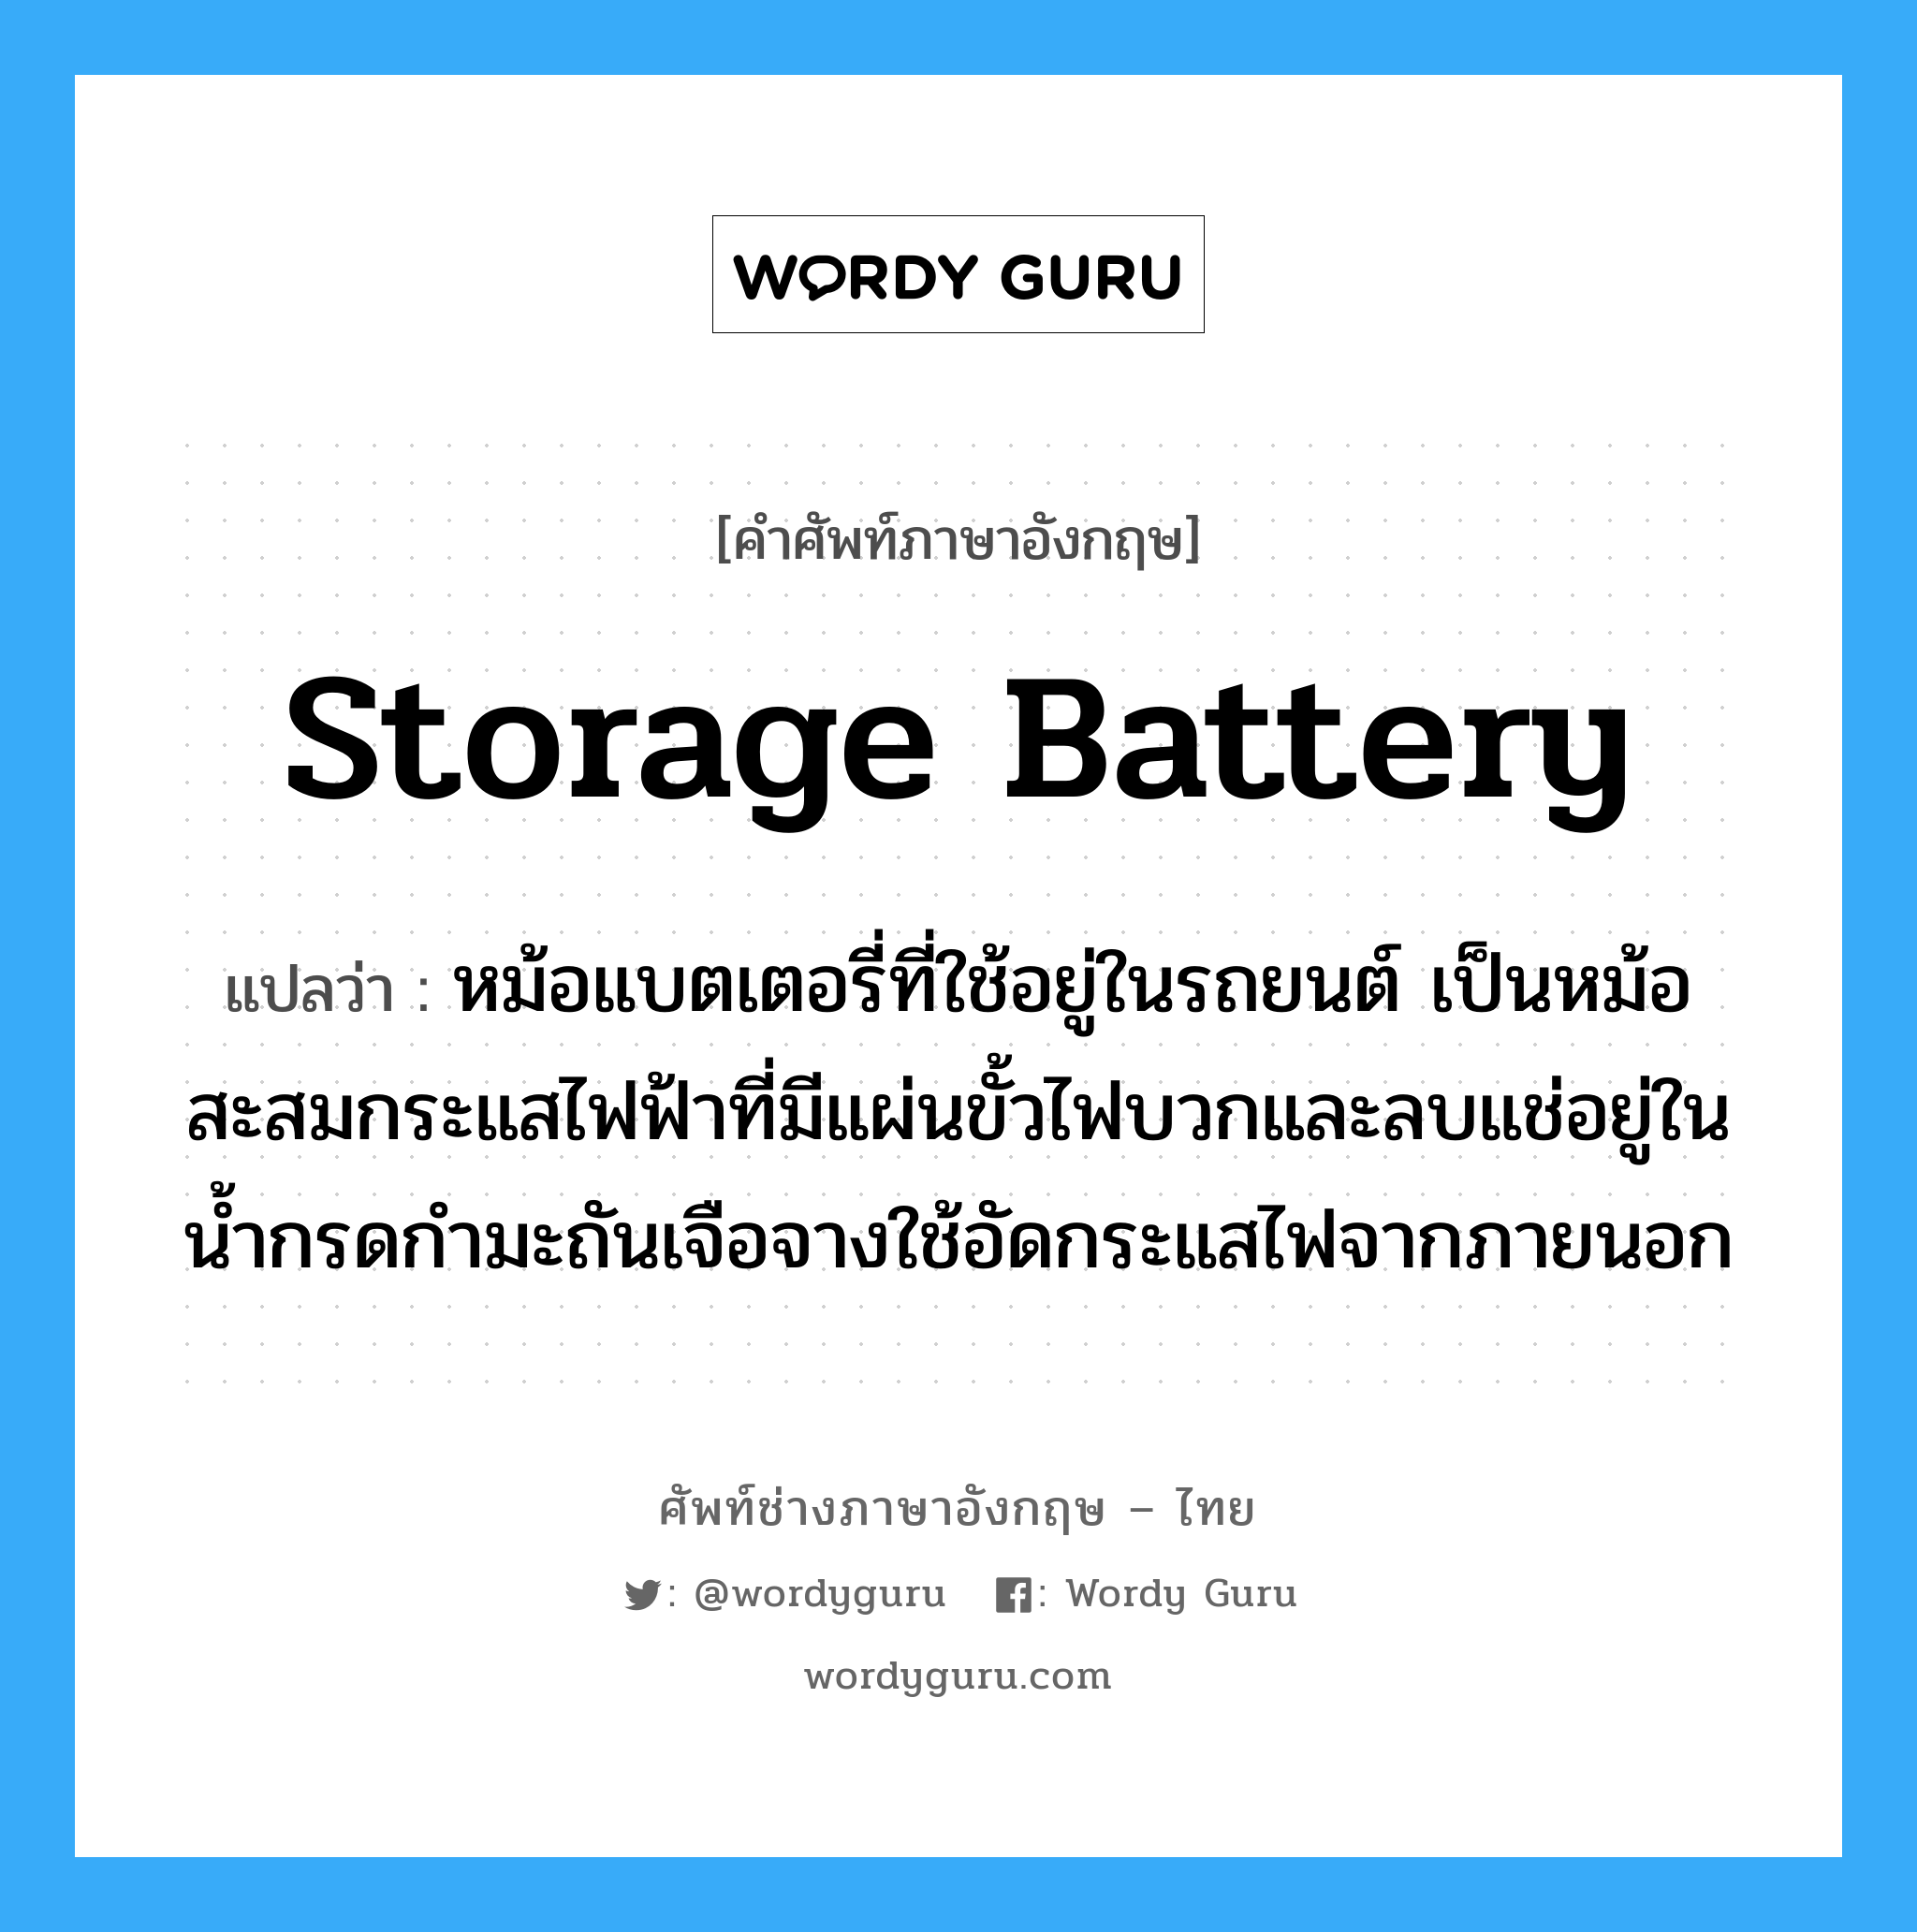 storage battery แปลว่า?, คำศัพท์ช่างภาษาอังกฤษ - ไทย storage battery คำศัพท์ภาษาอังกฤษ storage battery แปลว่า หม้อแบตเตอรี่ที่ใช้อยู่ในรถยนต์ เป็นหม้อสะสมกระแสไฟฟ้าที่มีแผ่นขั้วไฟบวกและลบแช่อยู่ในน้ำกรดกำมะถันเจือจางใช้อัดกระแสไฟจากภายนอก